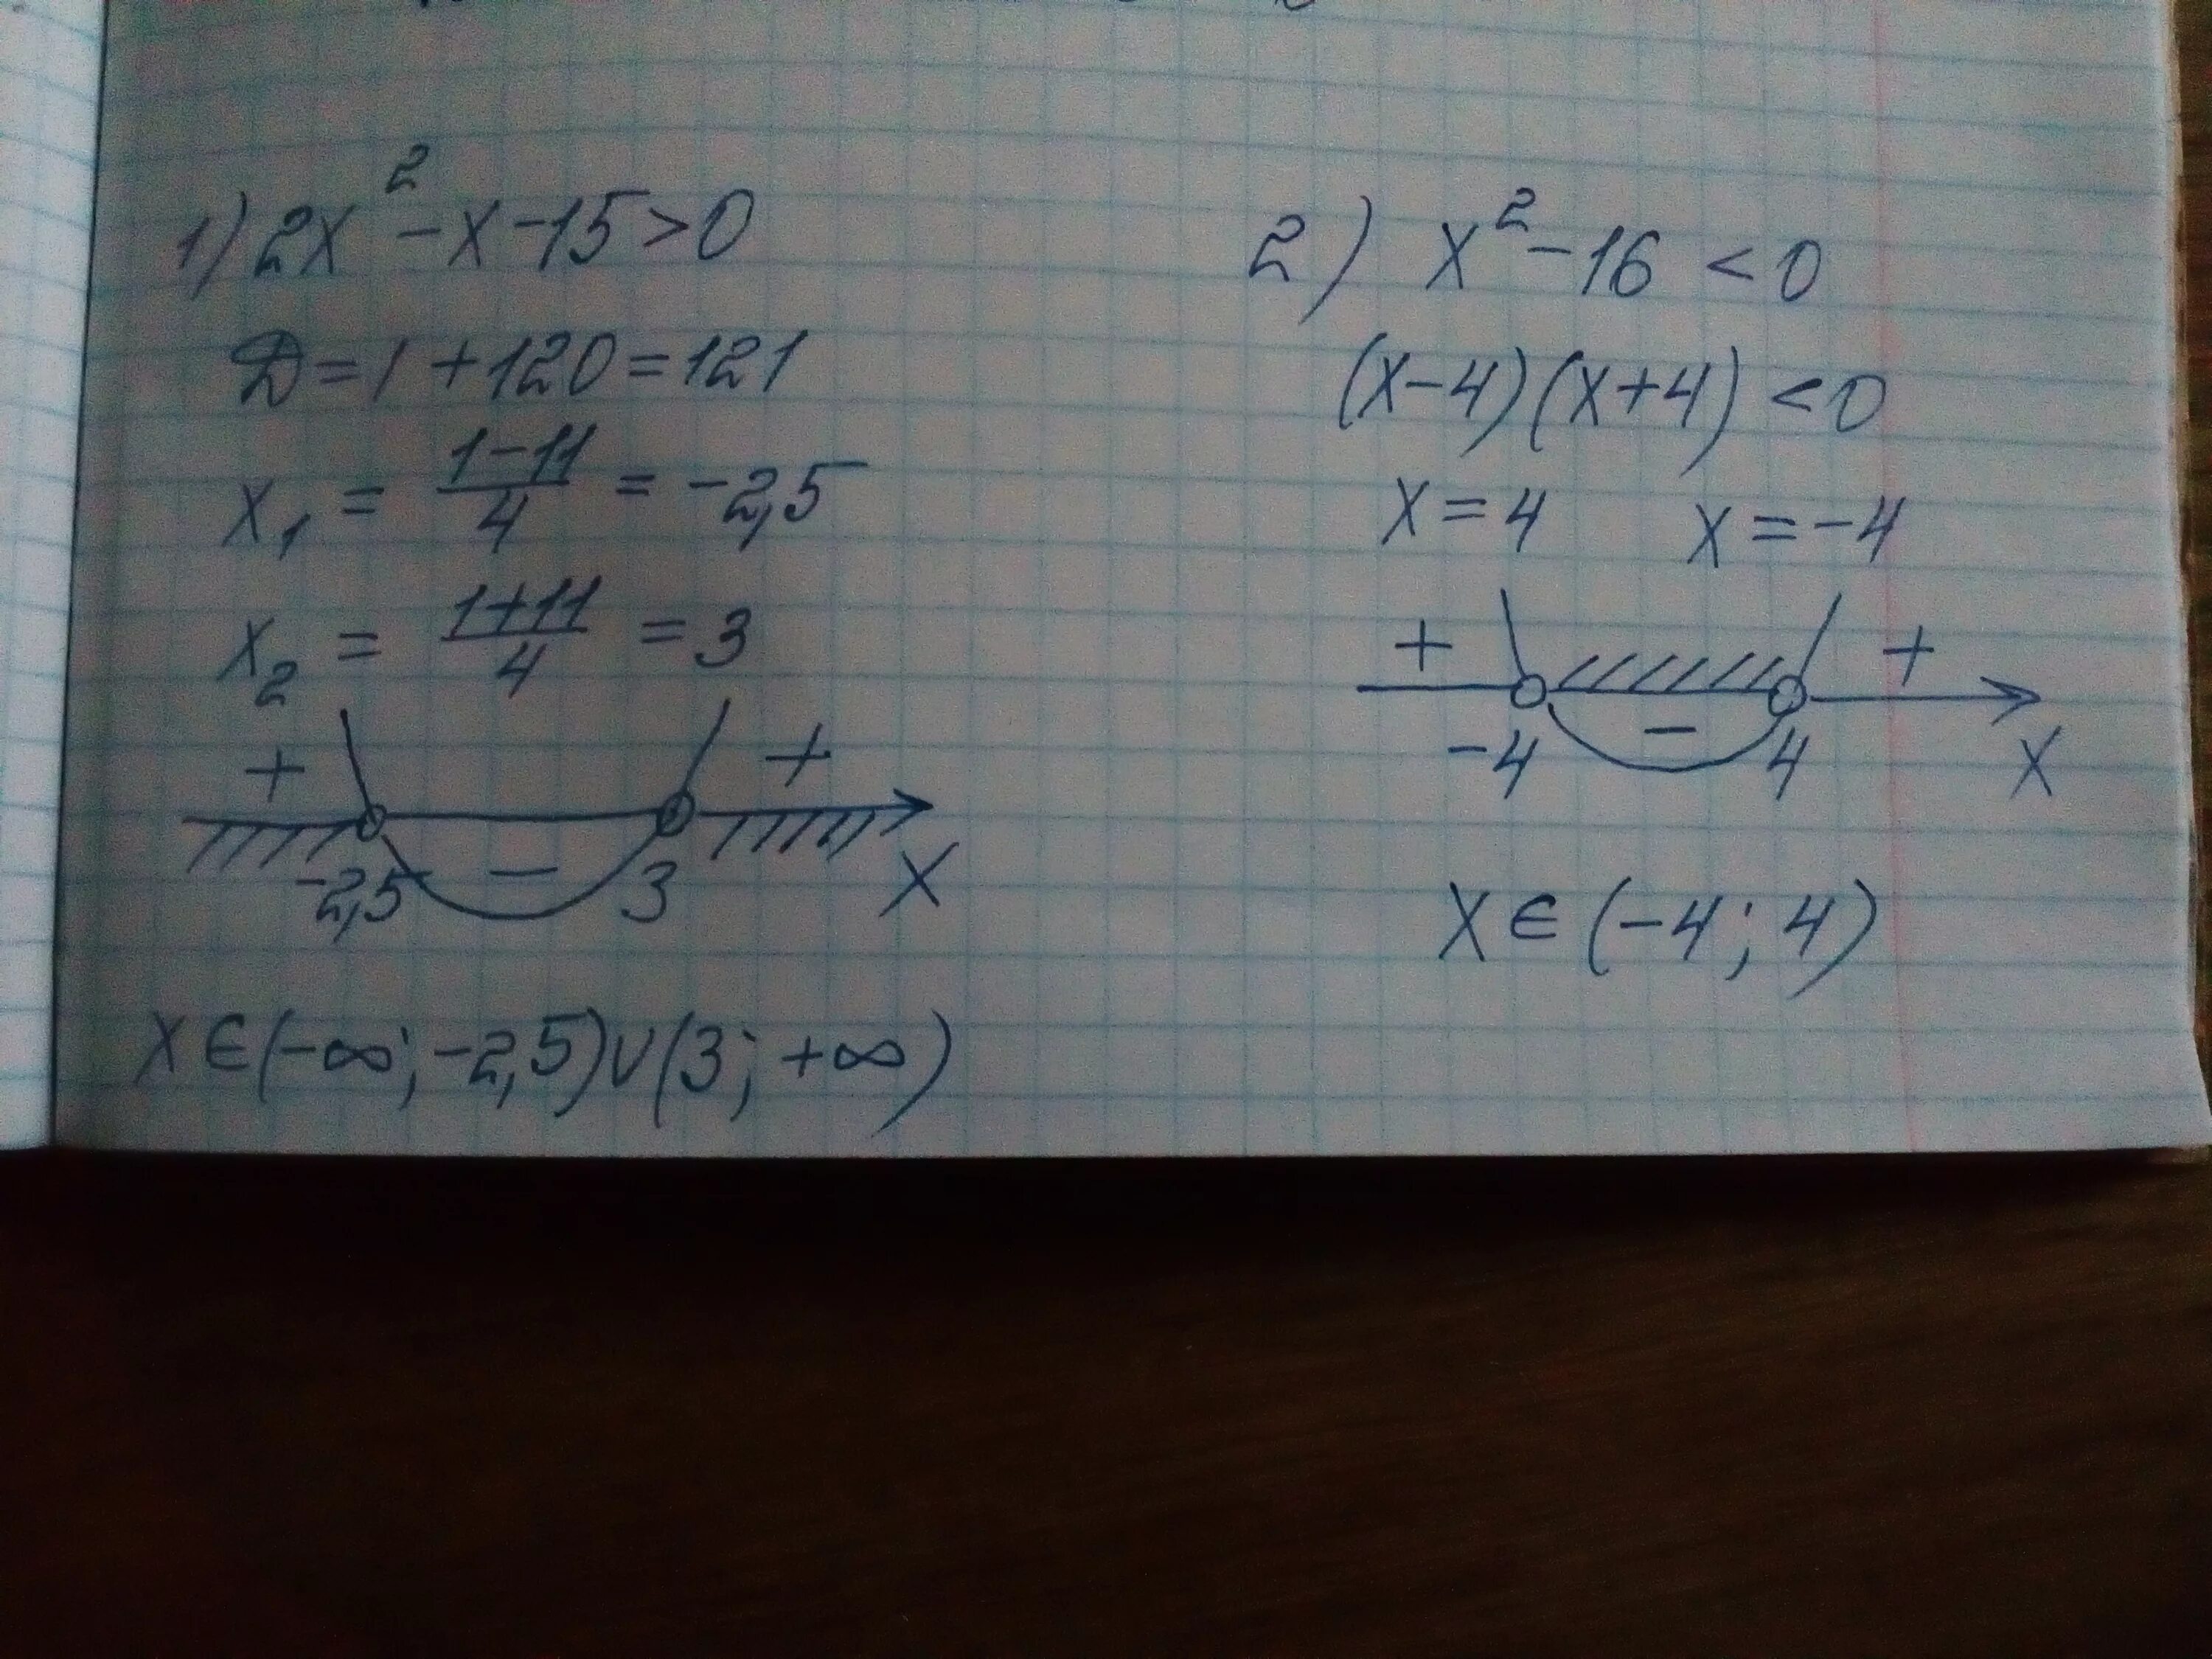 X2-15=2x. X2-2x-15=0. X X + = 2 15.. X2+15x>0. 0 5 x 0 15x